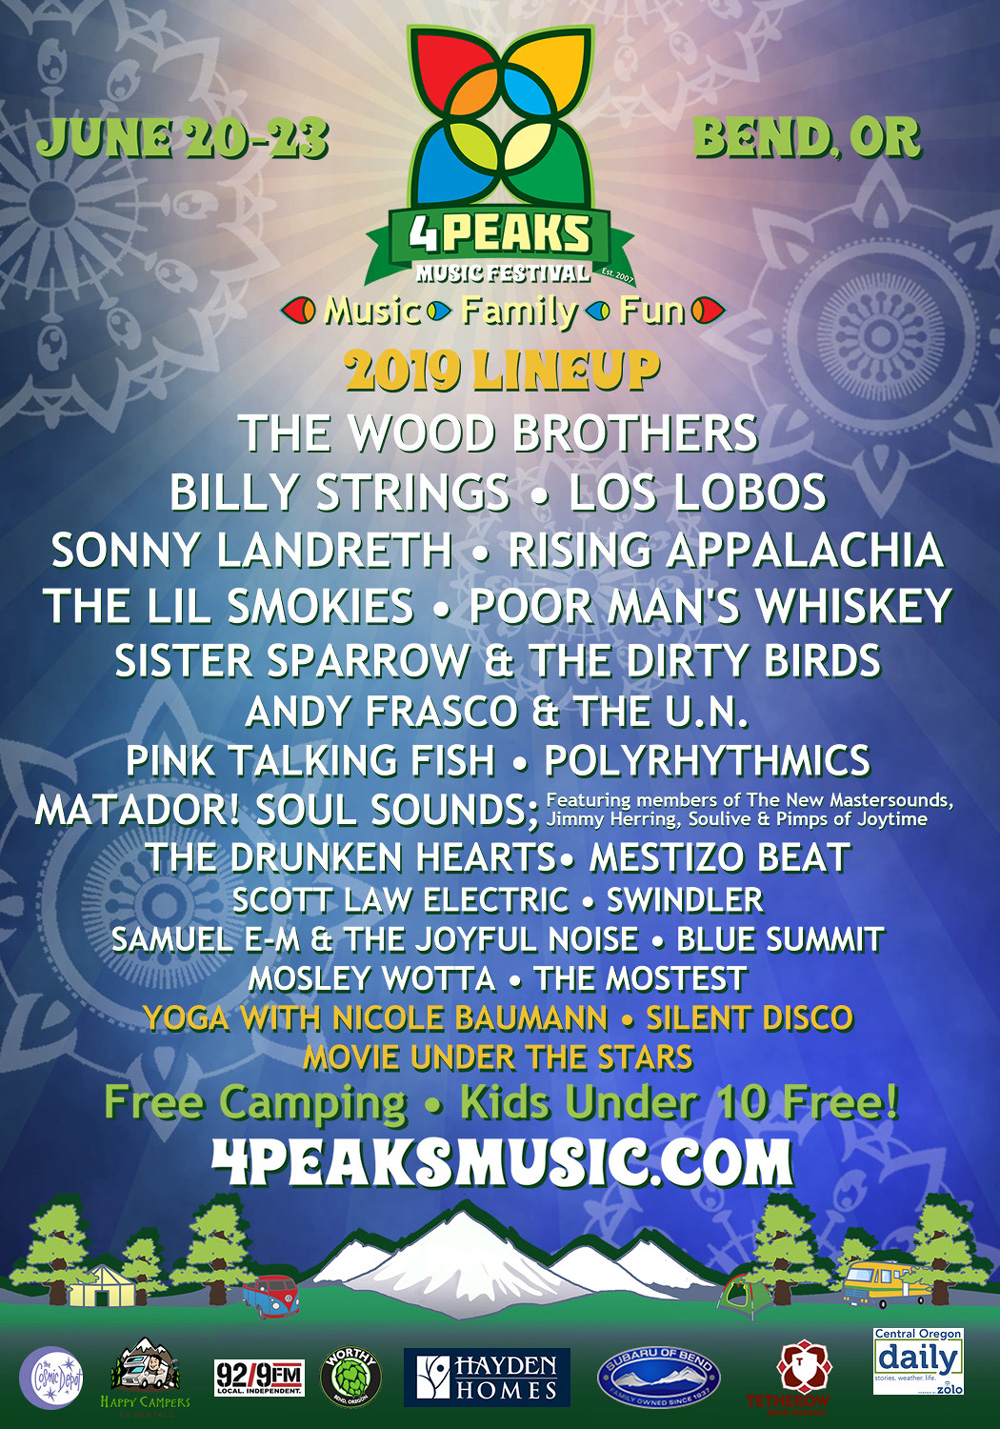 4peaks music festival